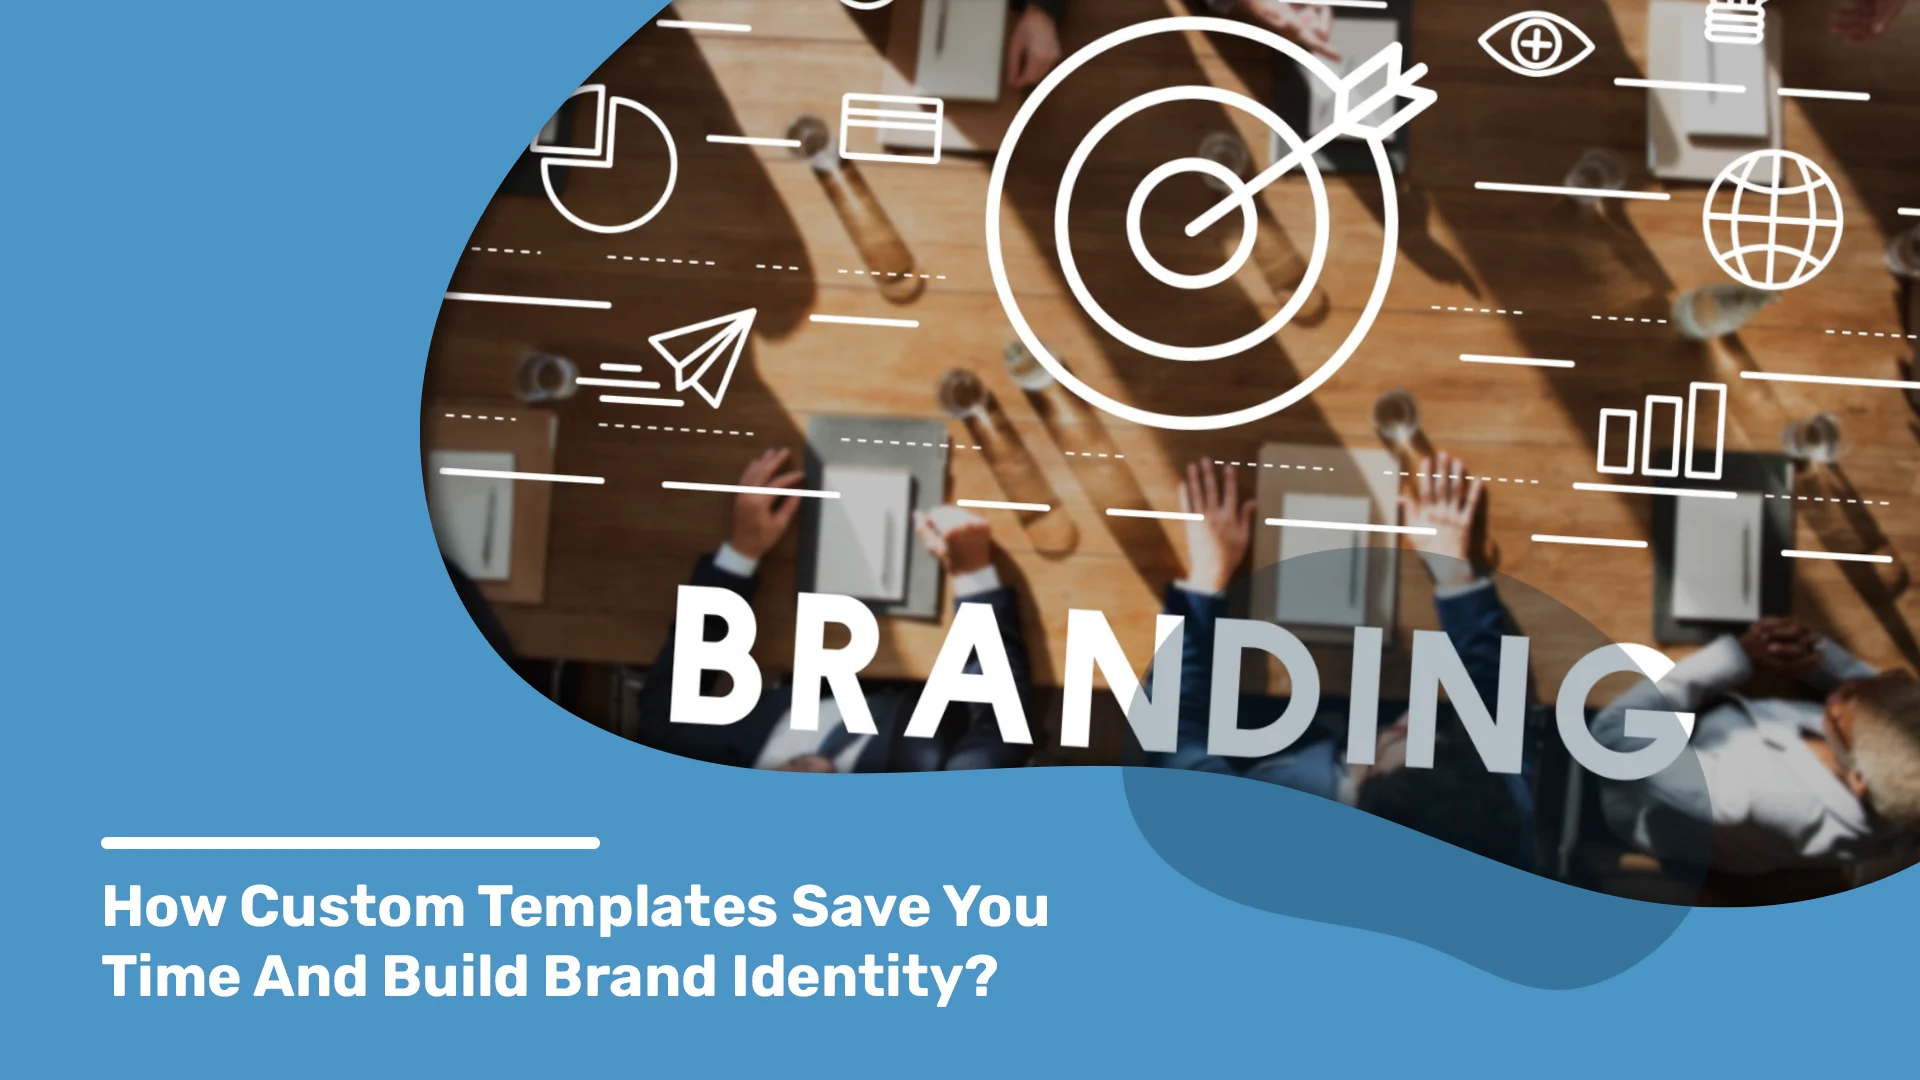 Learn how custom templates save your brand